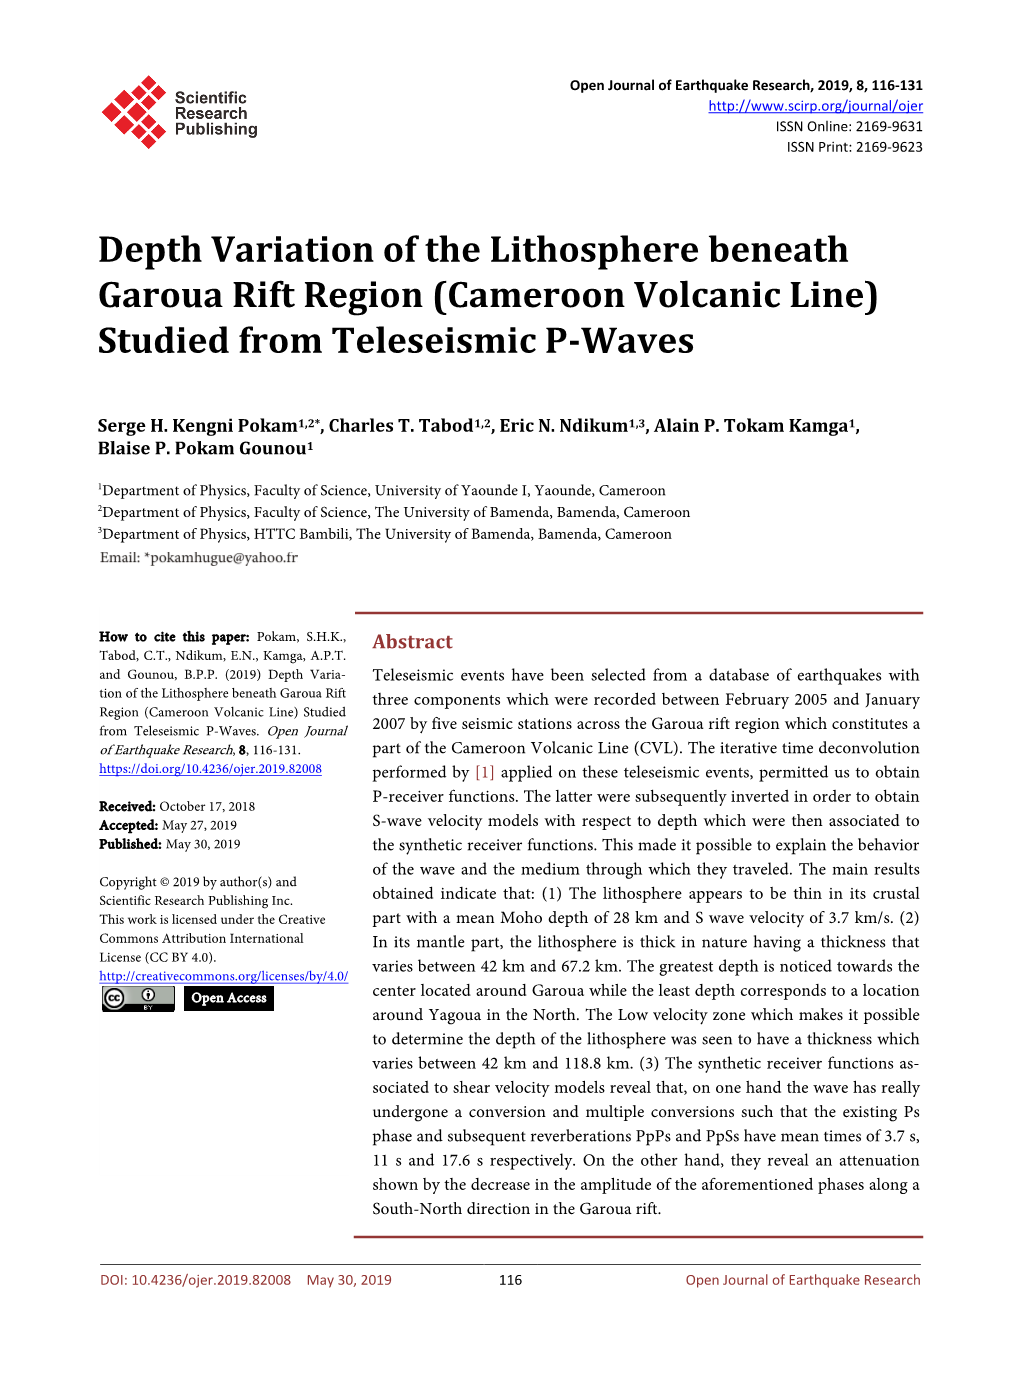 Depth Variation of the Lithosphere Beneath Garoua Rift Region (Cameroon Volcanic Line) Studied from Teleseismic P-Waves